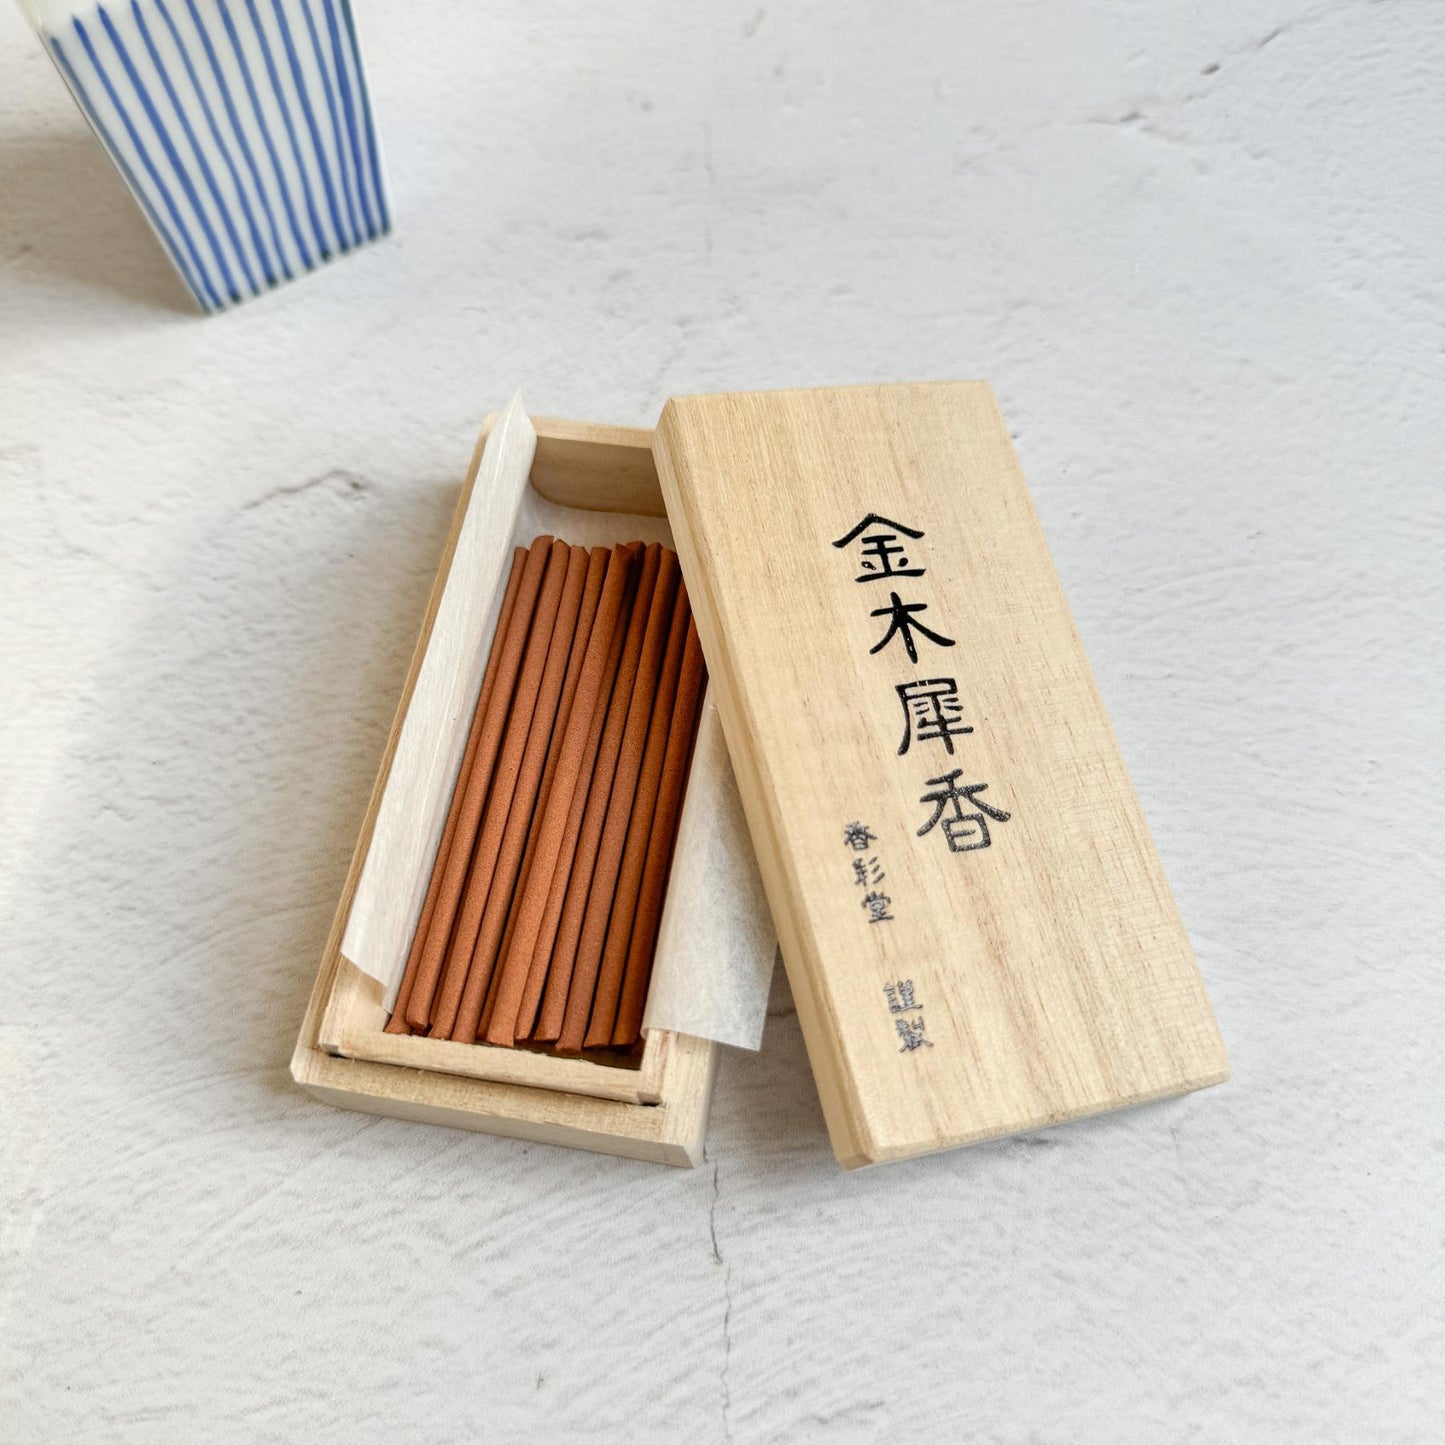 Japanese Incense "Koto no Kou" by Kousaido